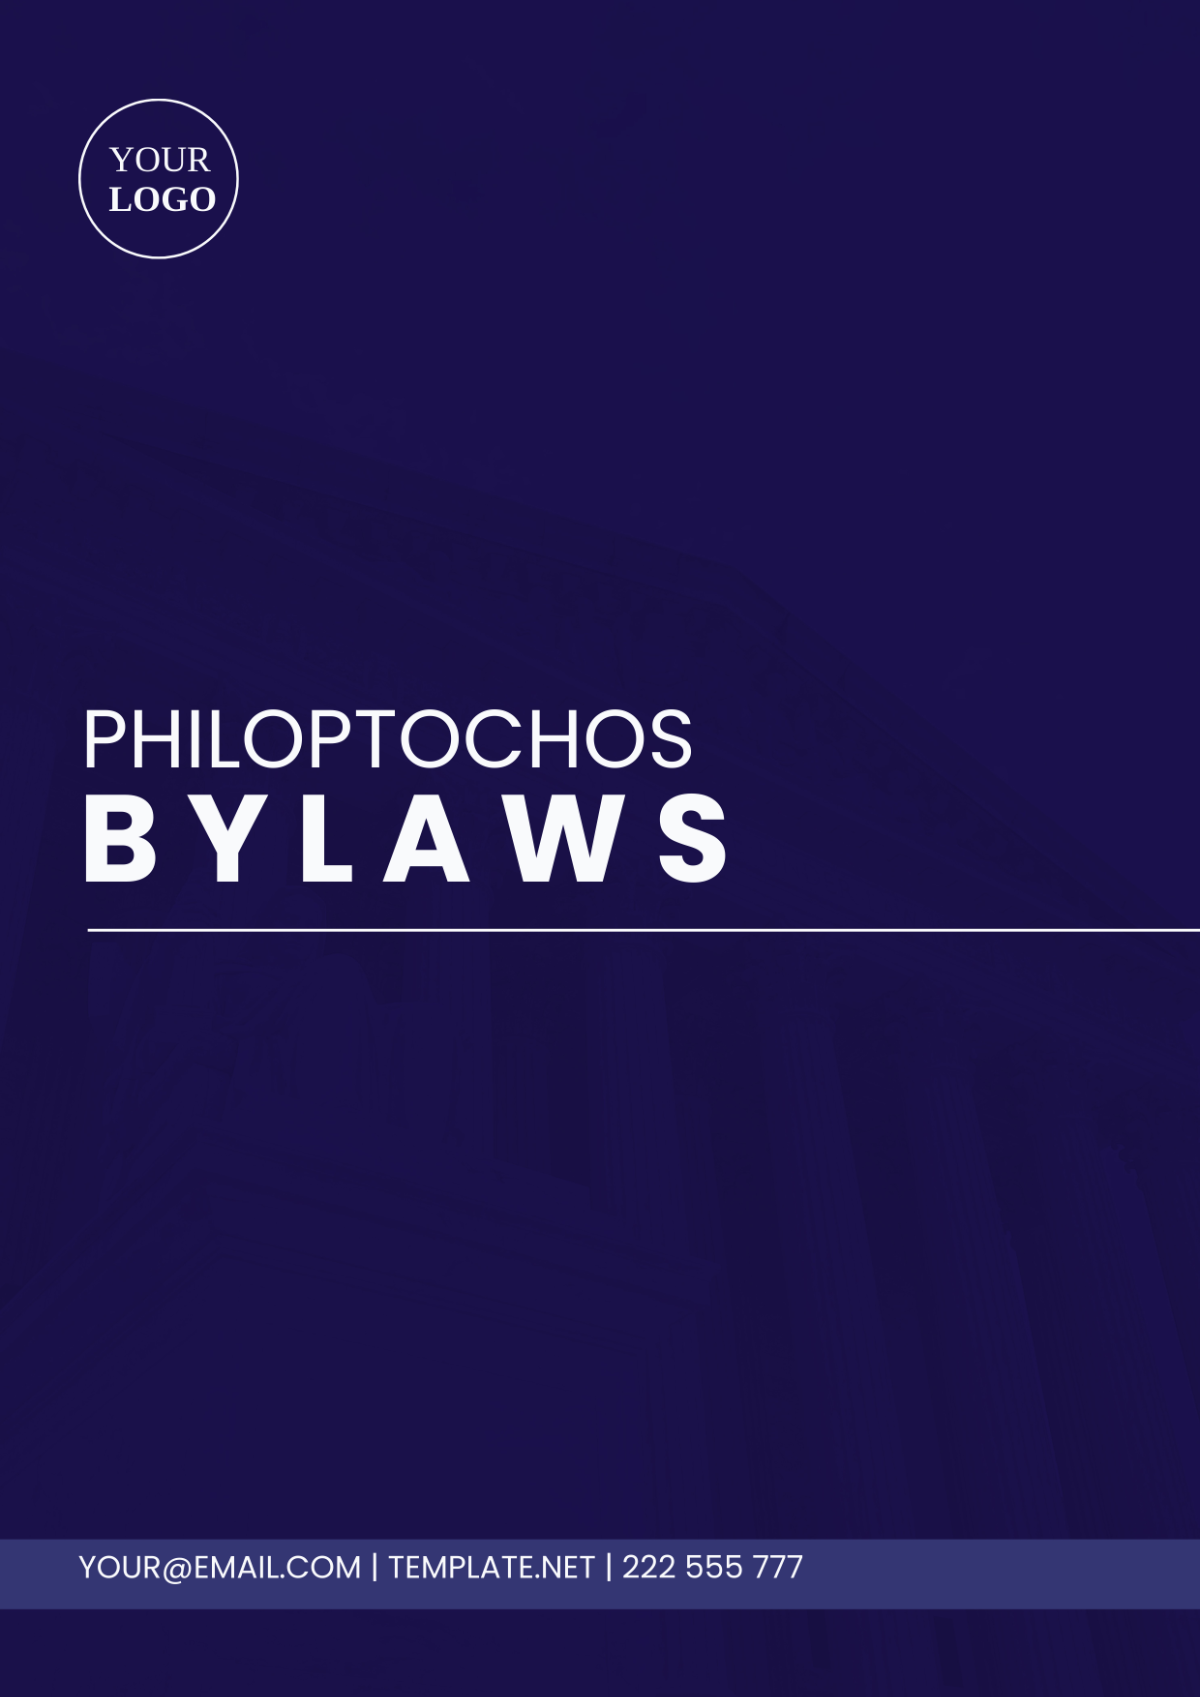 Philoptochos Bylaws Template